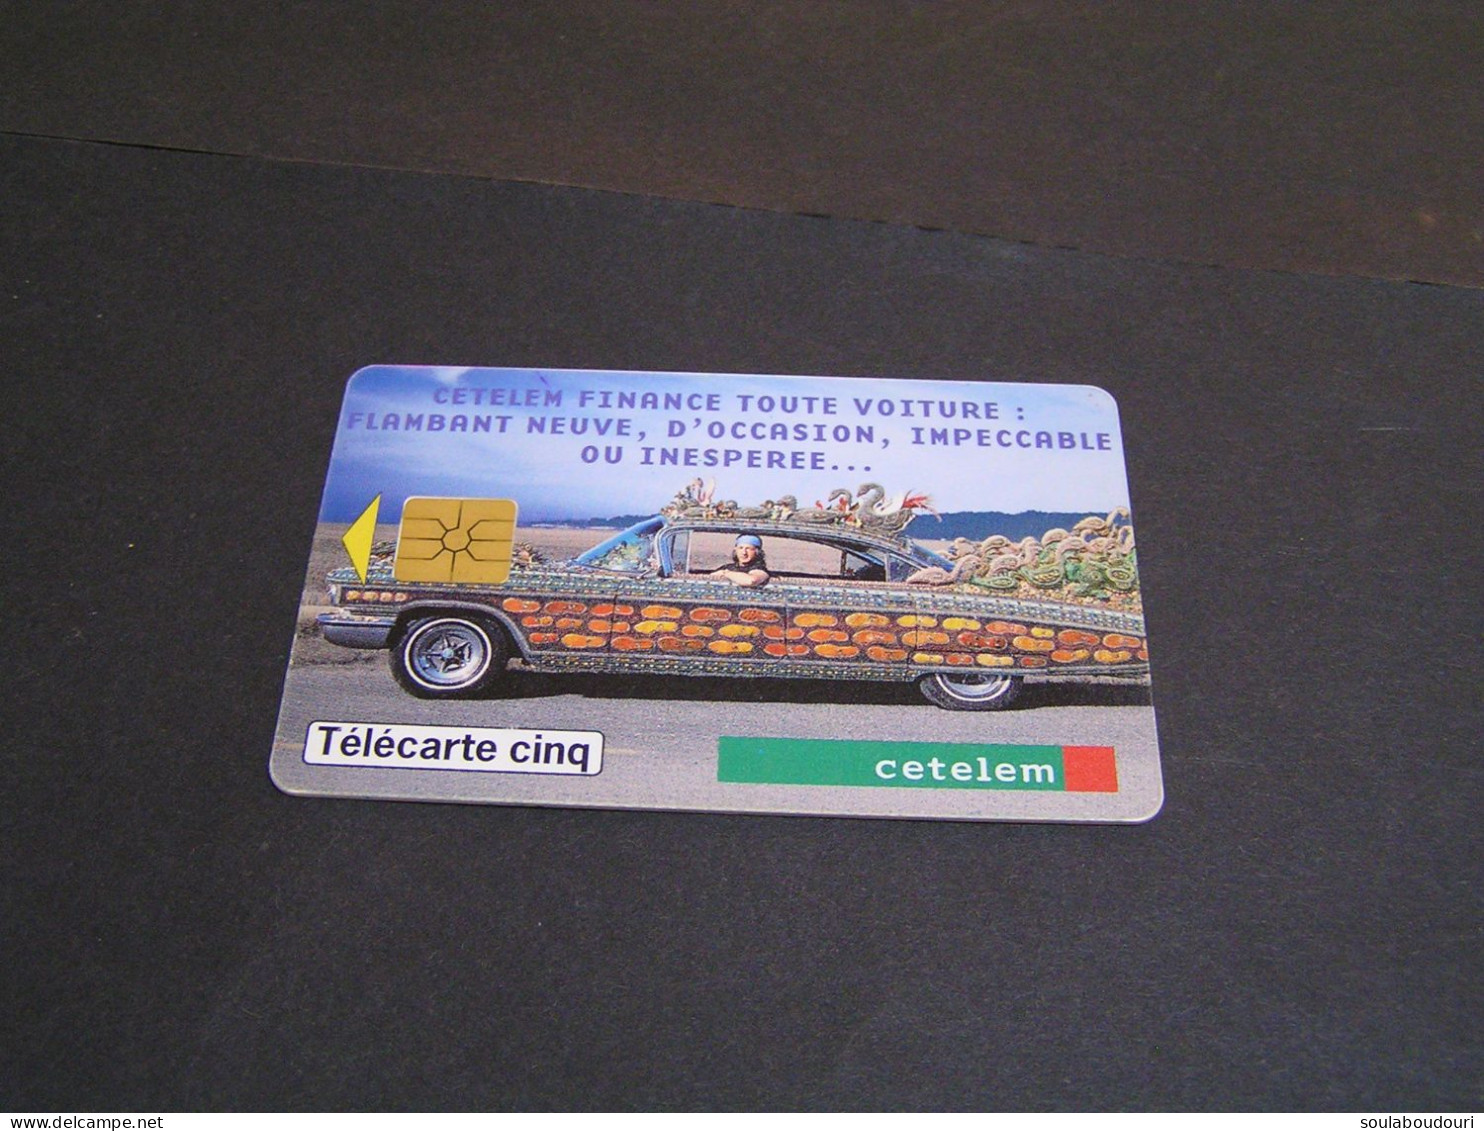 FRANCE Phonecards Private Tirage 12.000 Ex 10/96. - 5 Eenheden